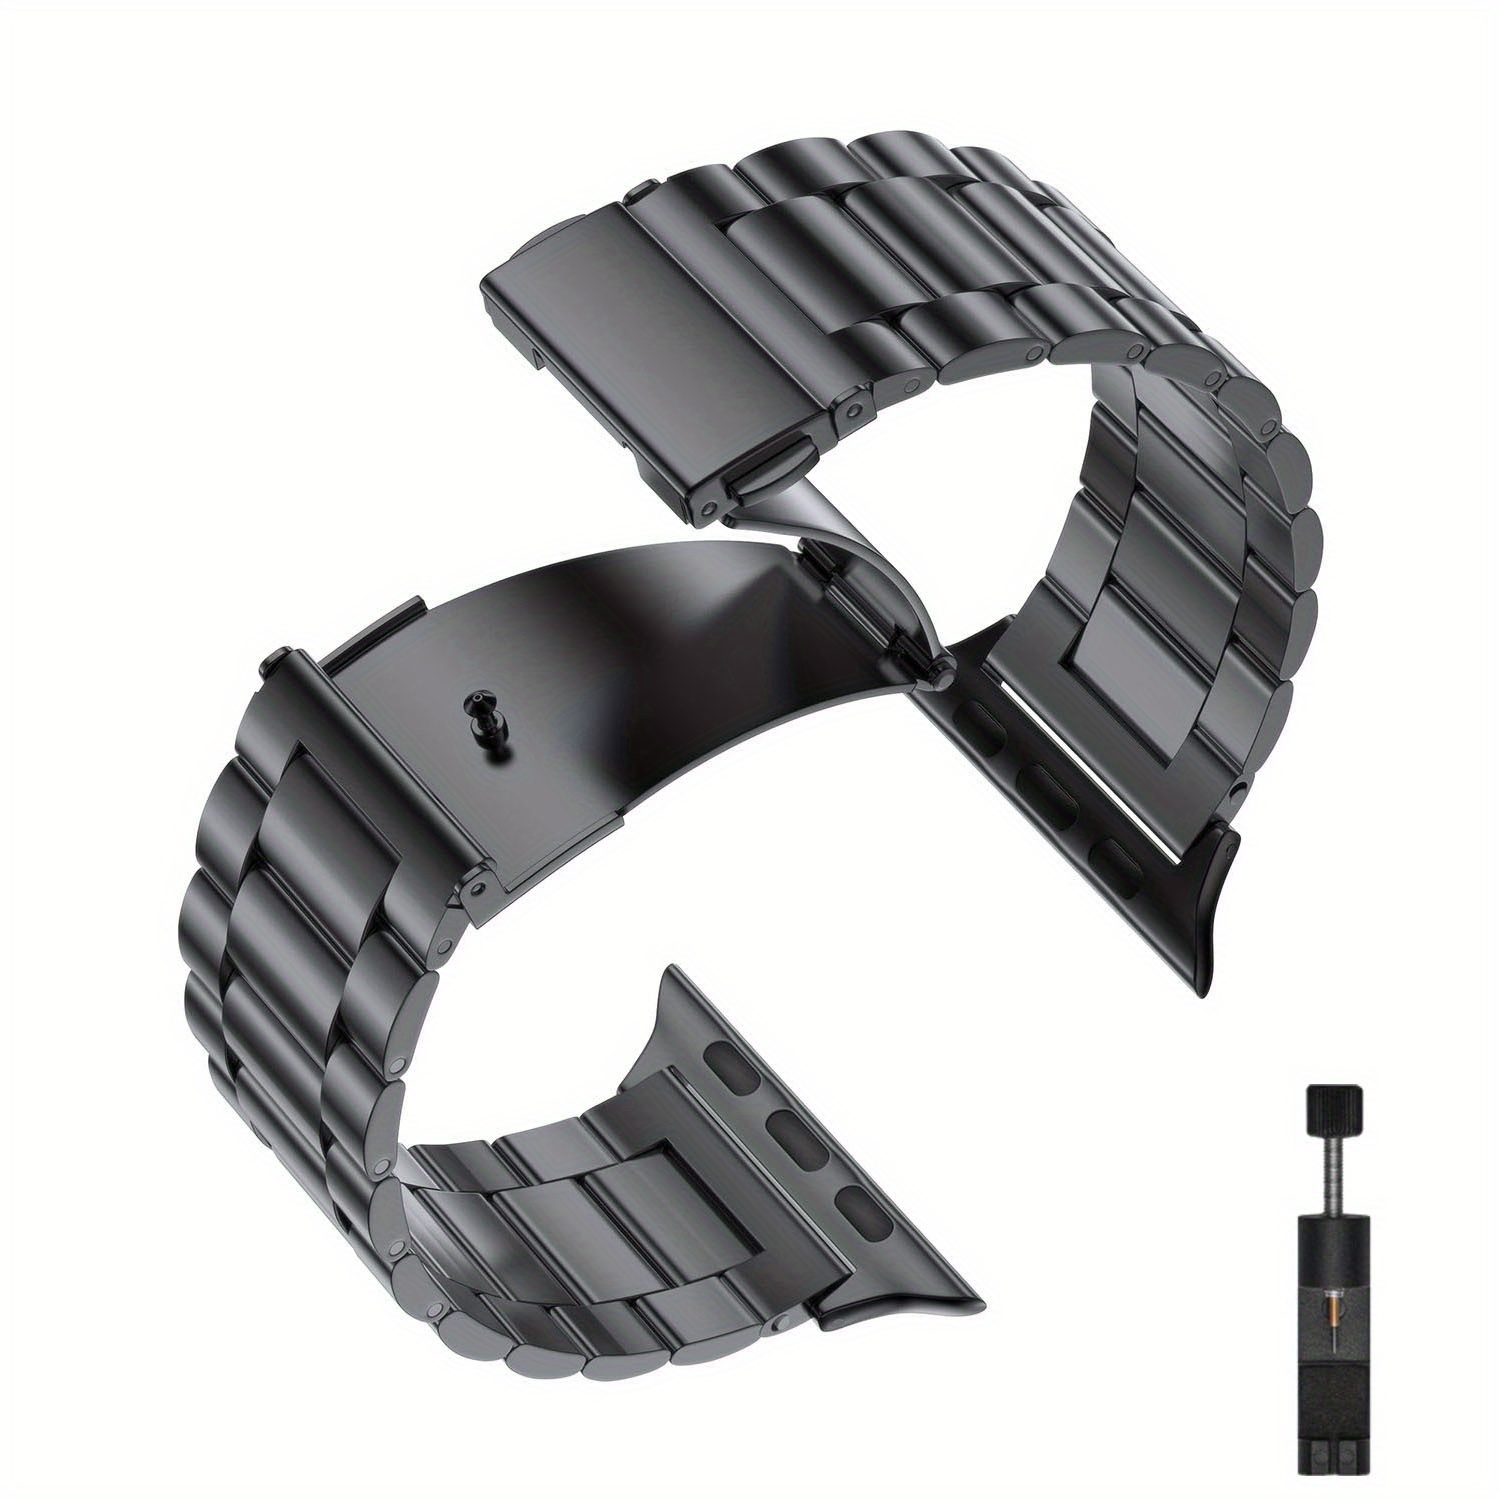 Steel Watch Chain Wristband, Metal Watch Chain Wristband